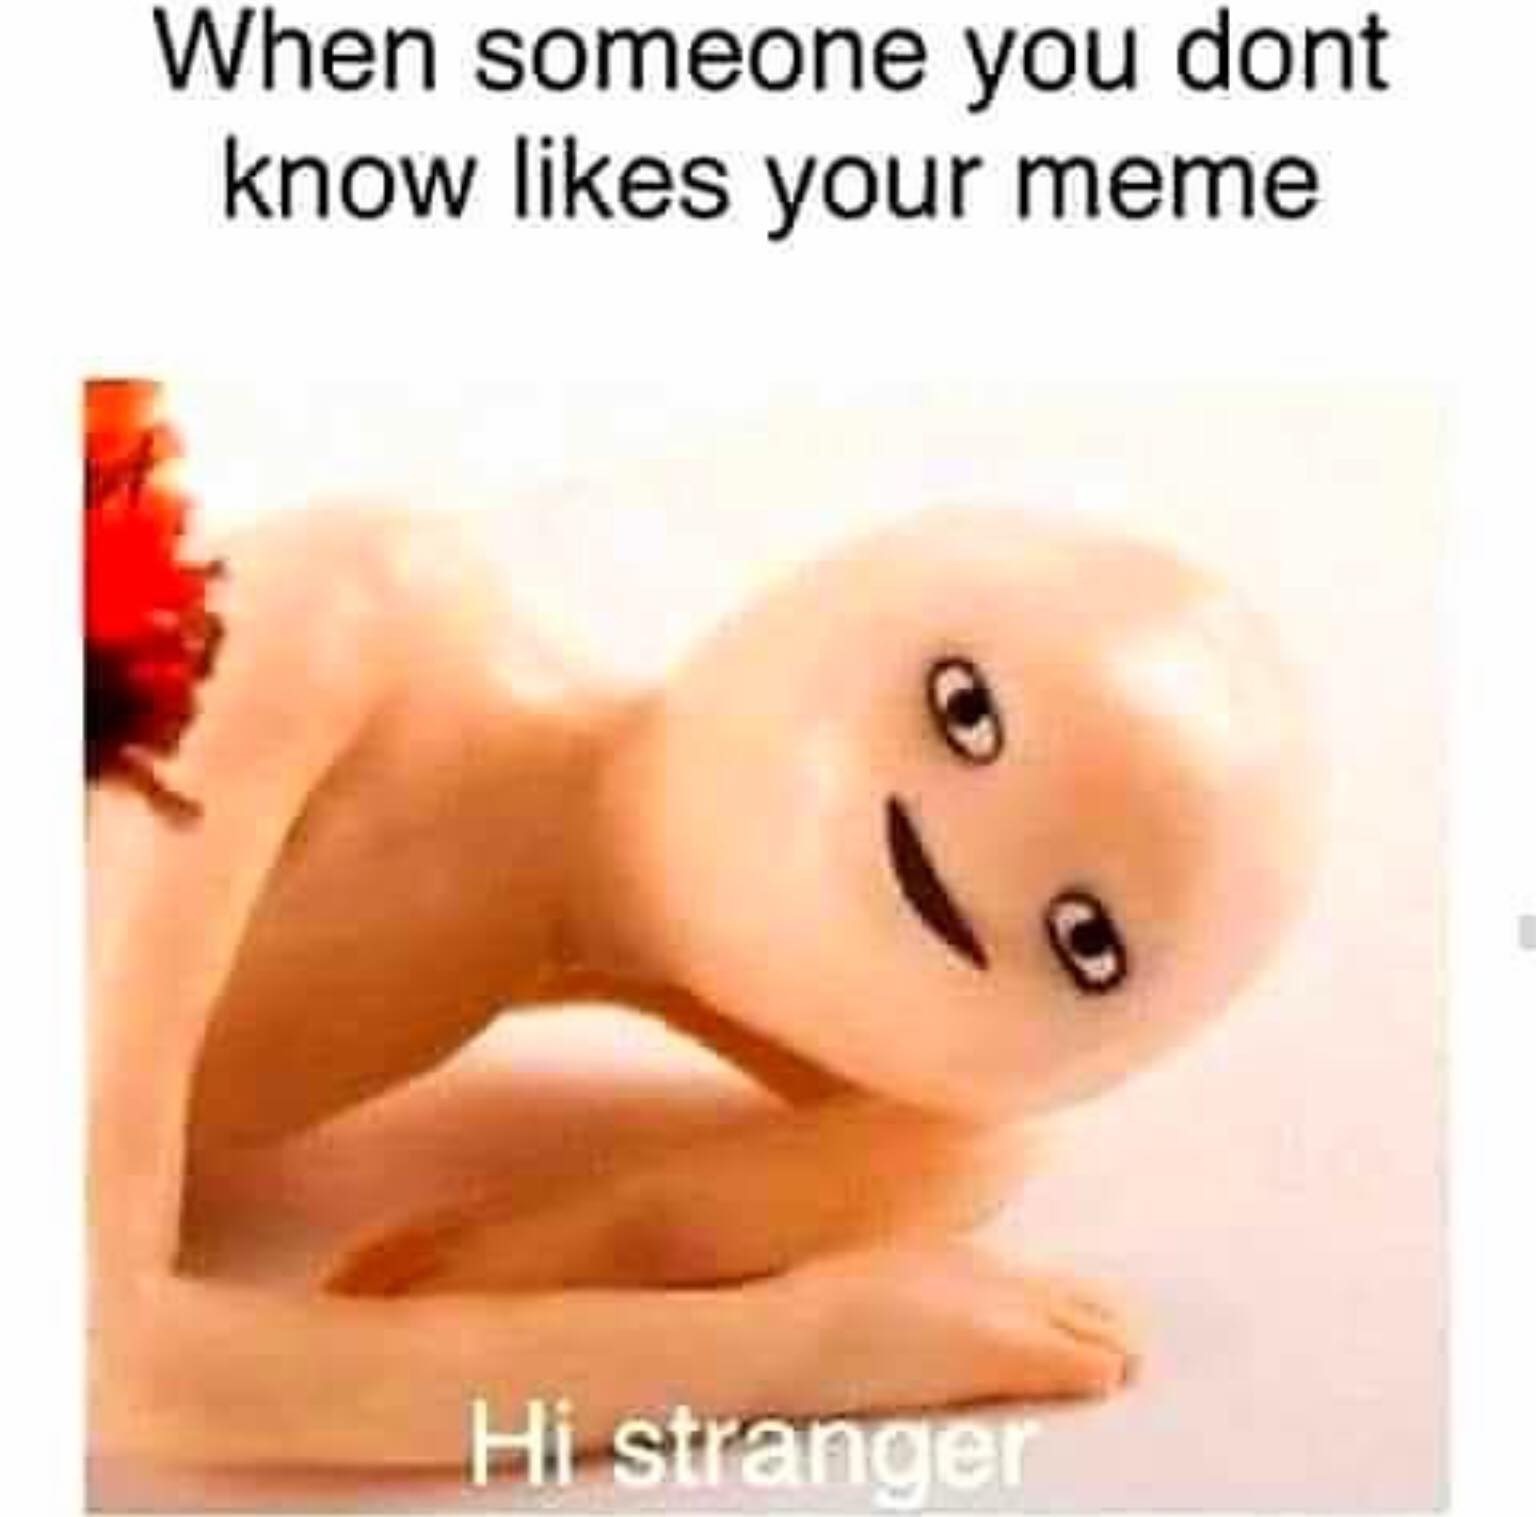 hi stranger meme - When someone you dont know your meme Hi stranger